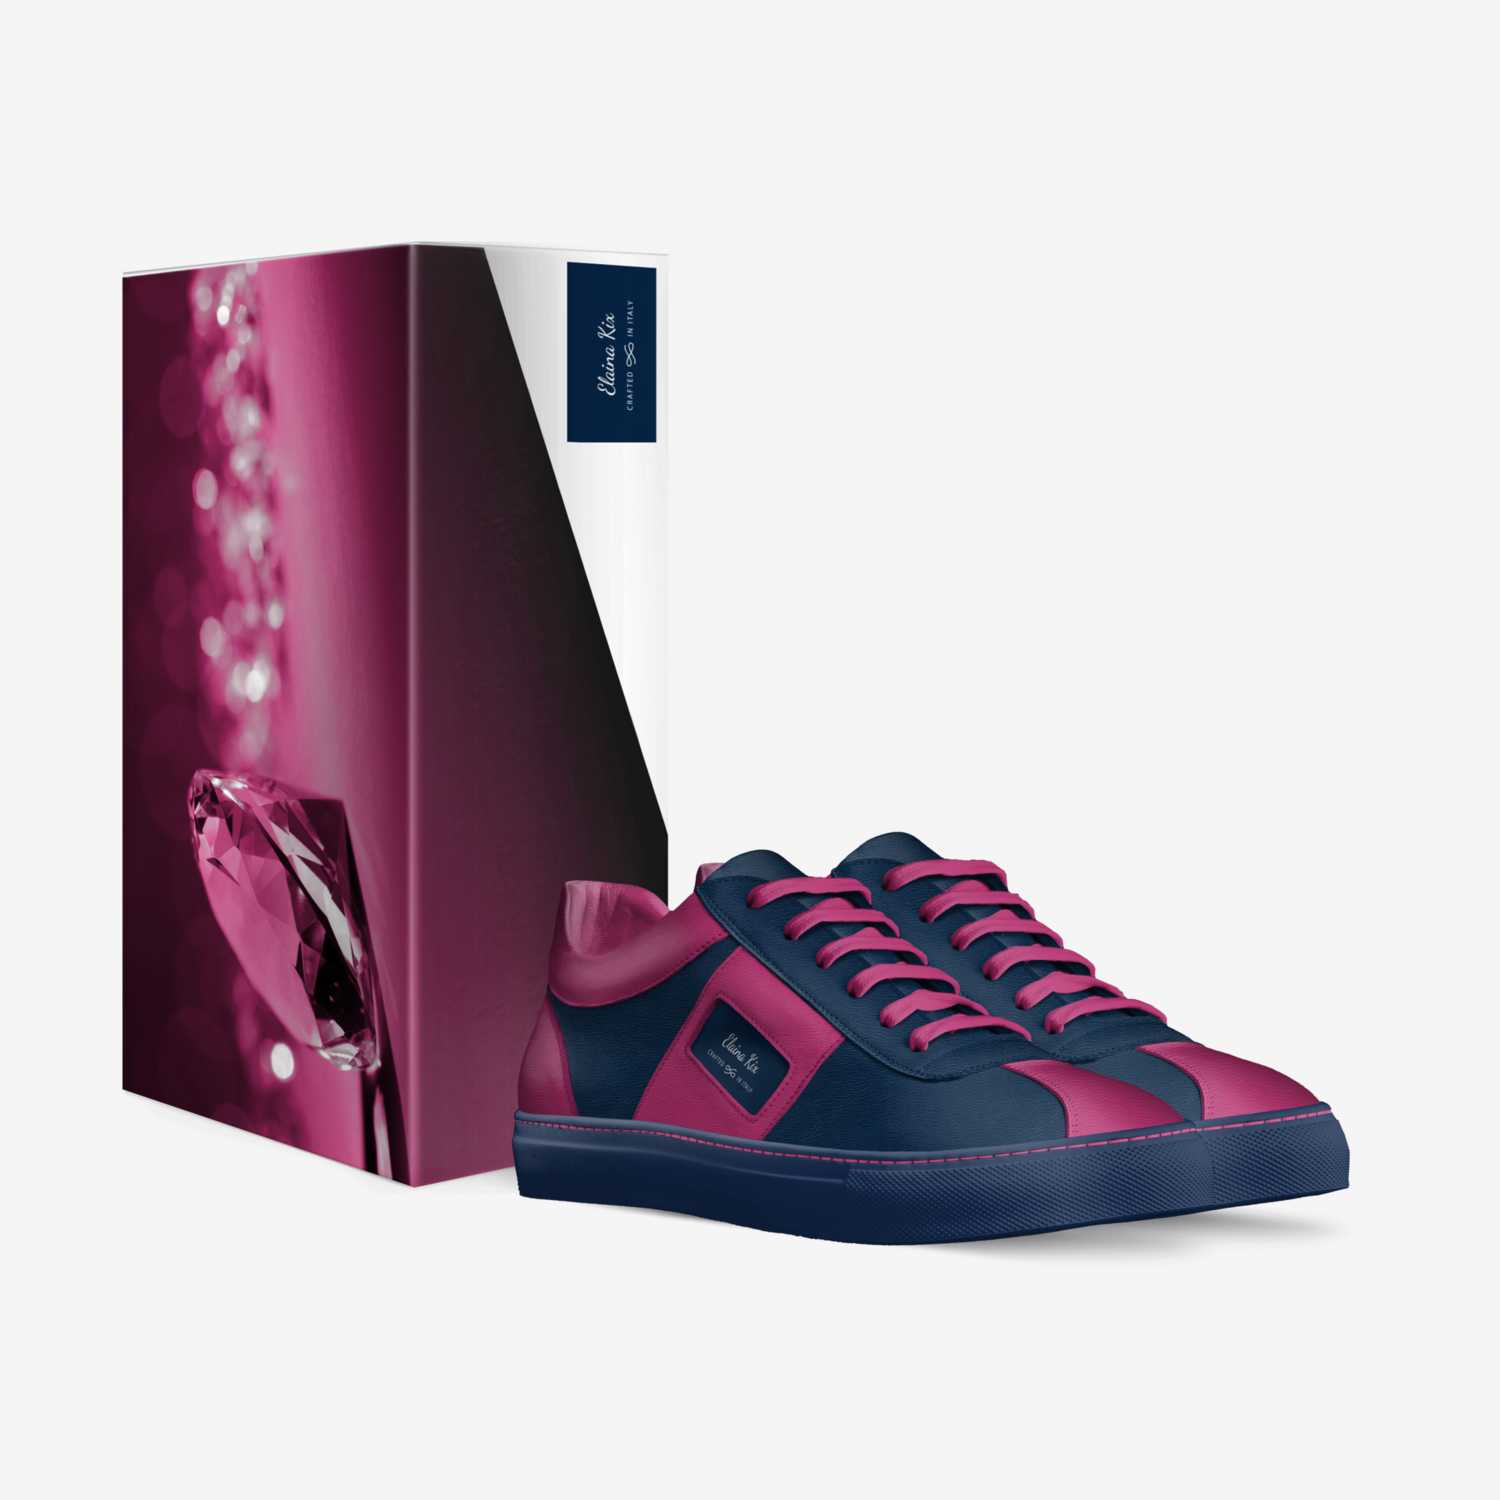 Elaina Kix custom made in Italy shoes by Demitrien Oliphant | Box view